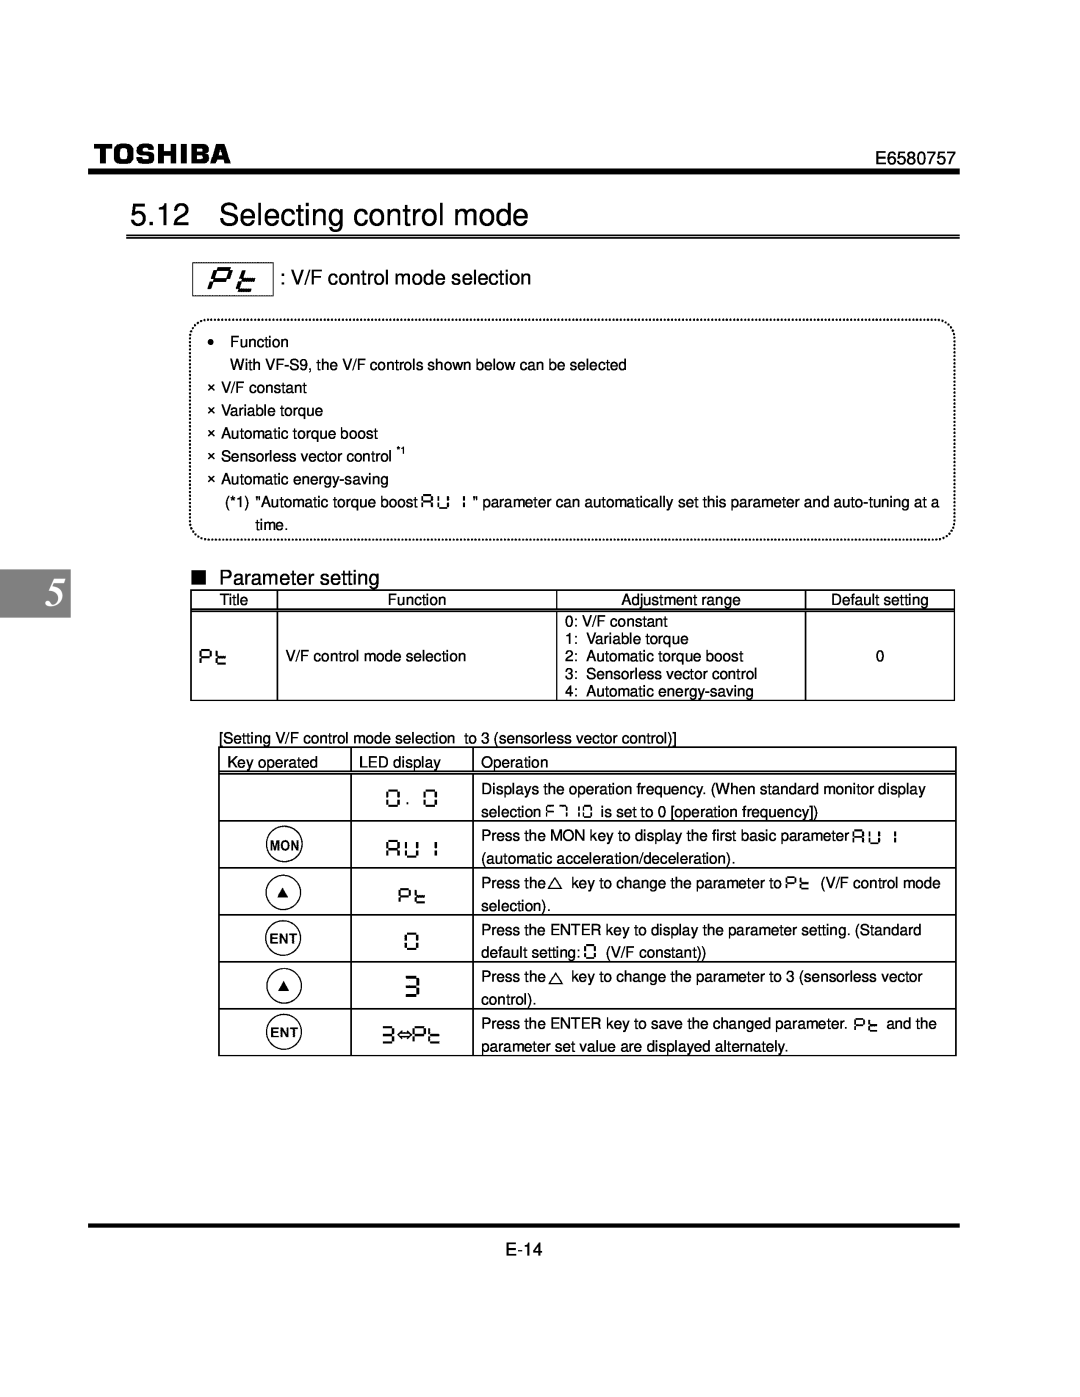 Toshiba VF-S9 manual Selecting control mode, V/F control mode selection, Parameter setting 